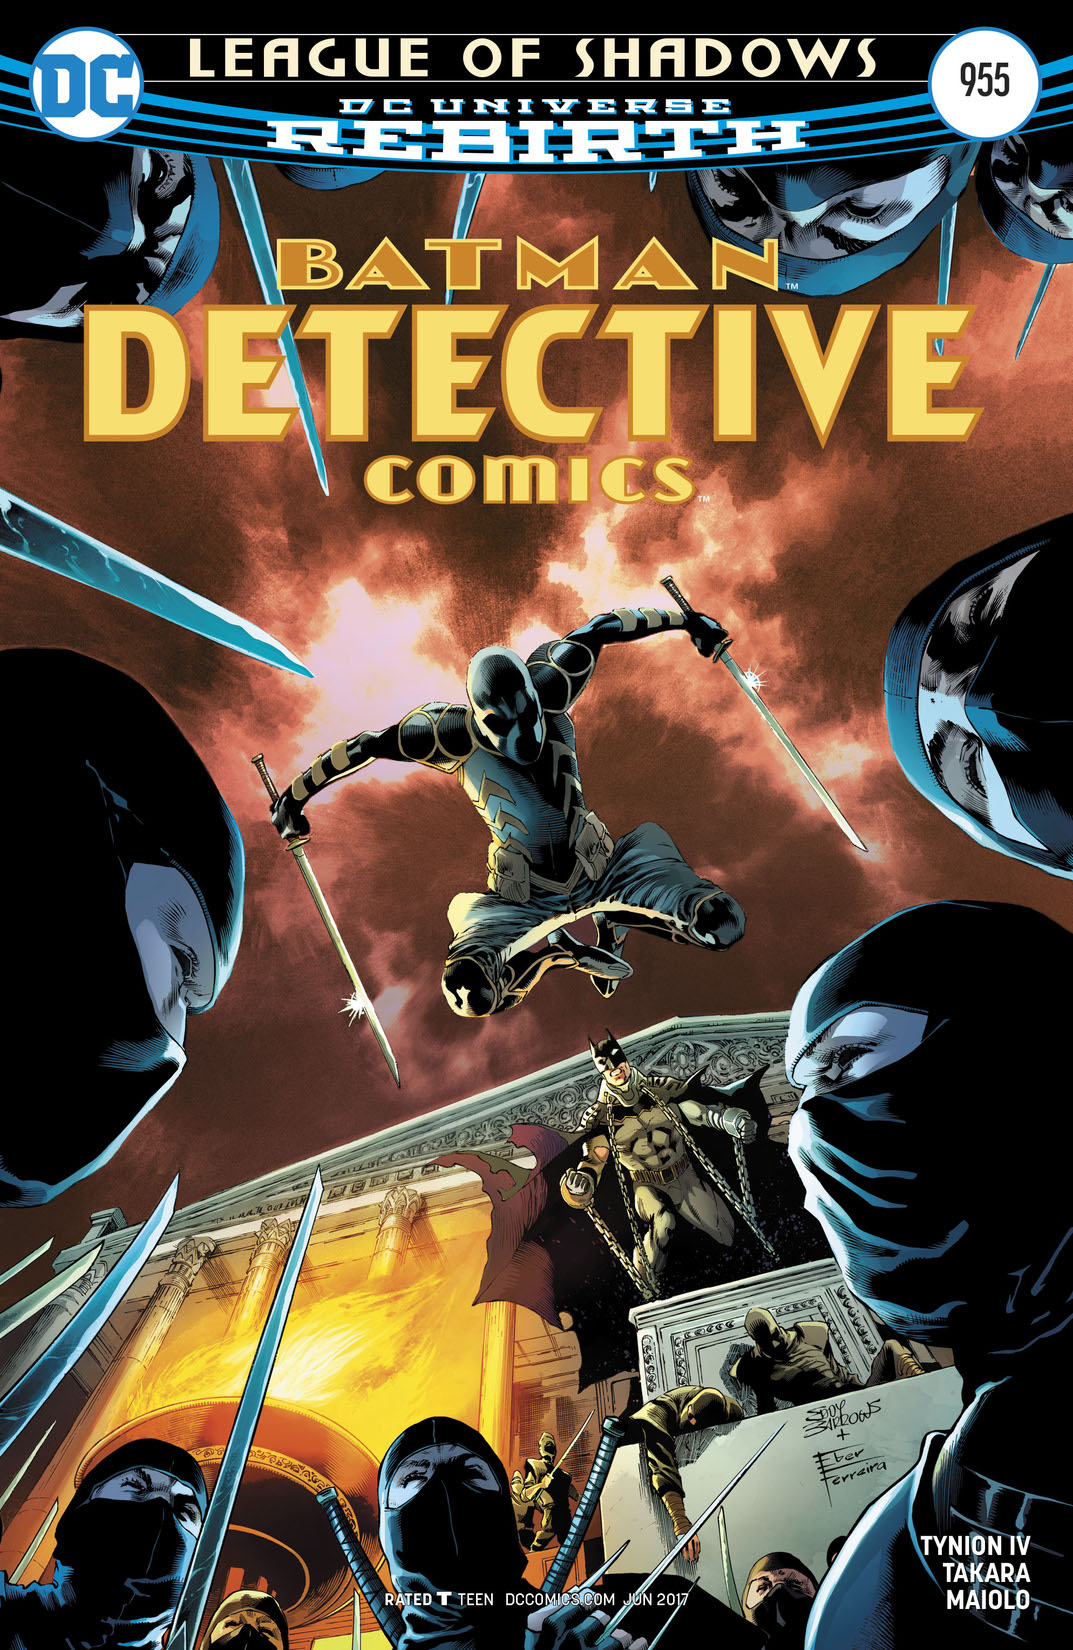 Detective Comics (2016-) #955 preview images